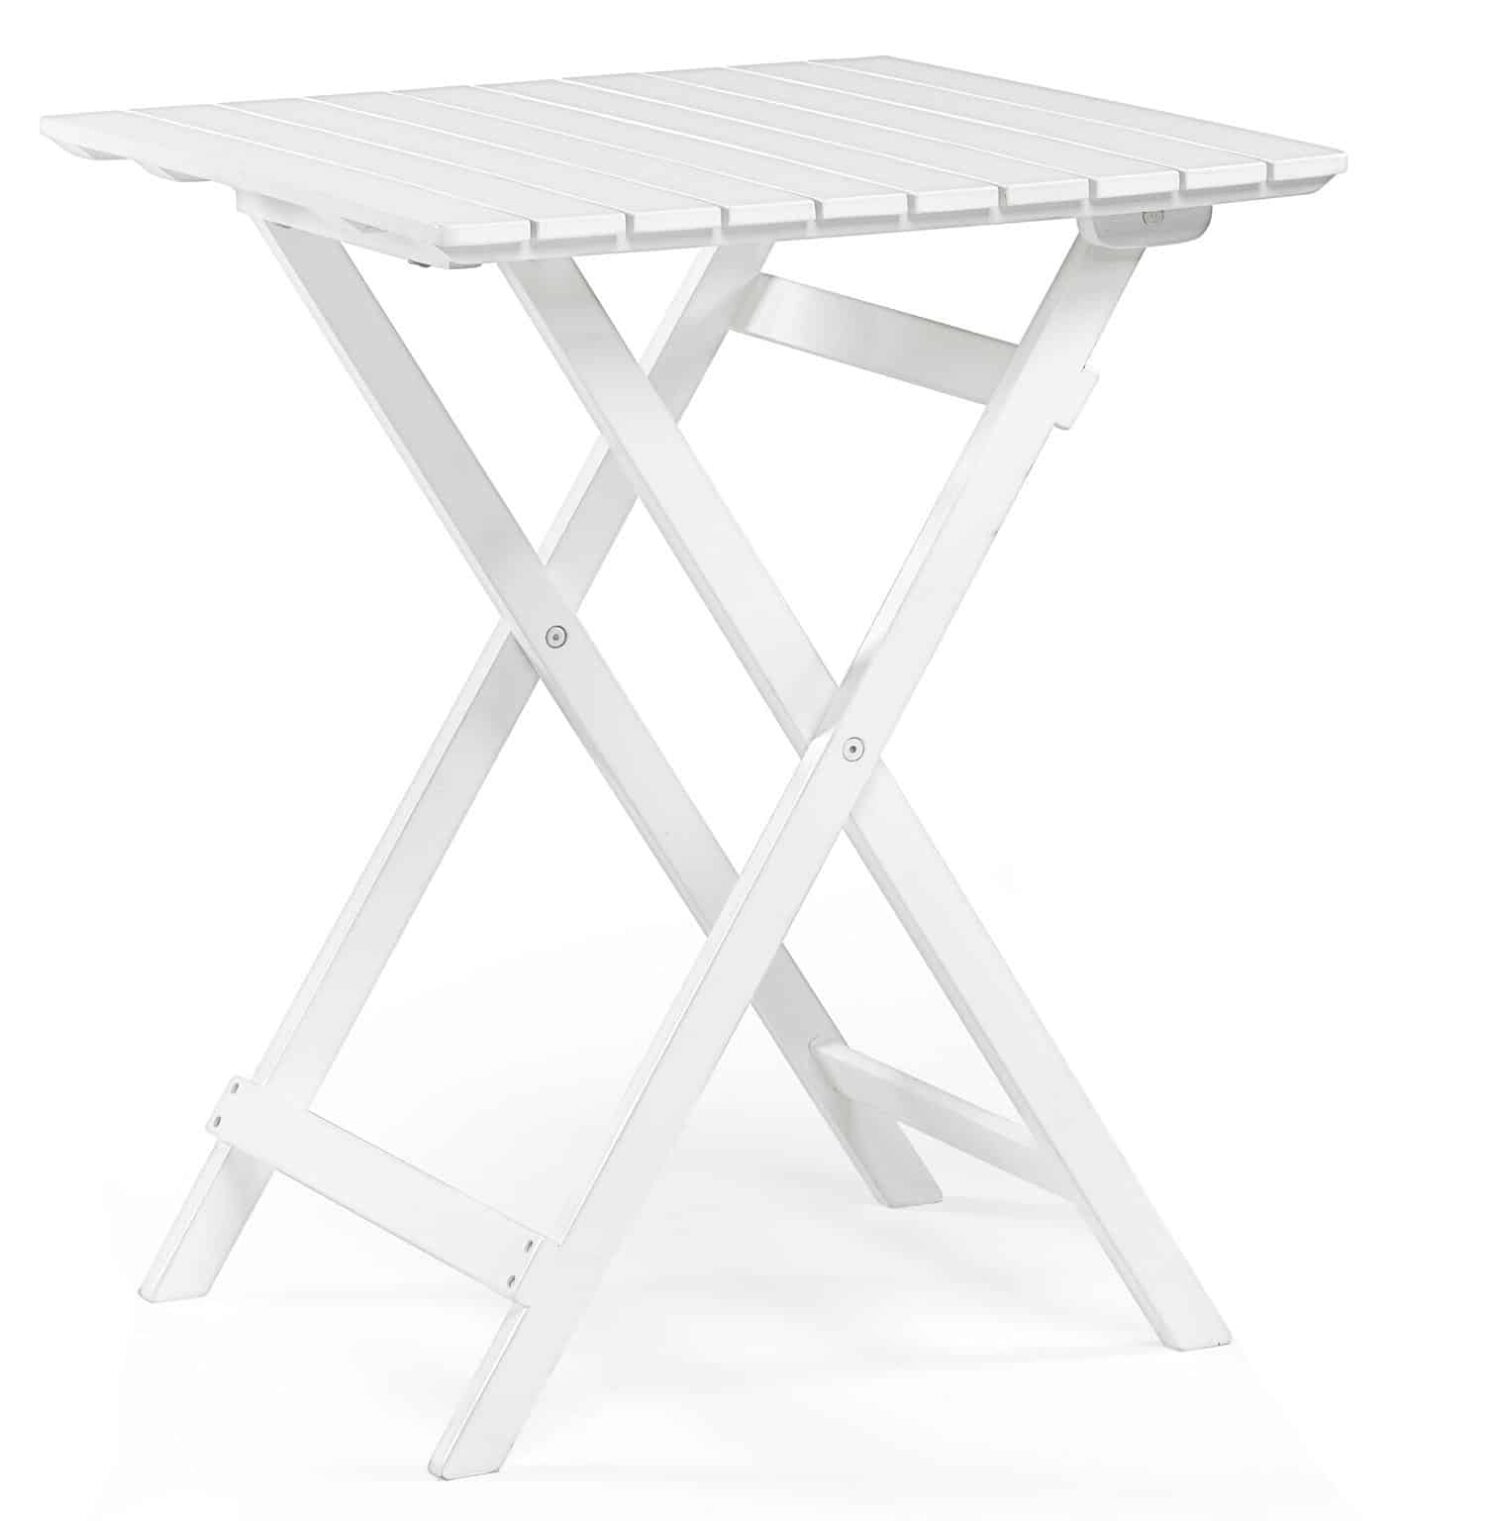 Hillerstorp Åre Cafébord 58X58 cm, fällbart bord i vitlackerad akacia.